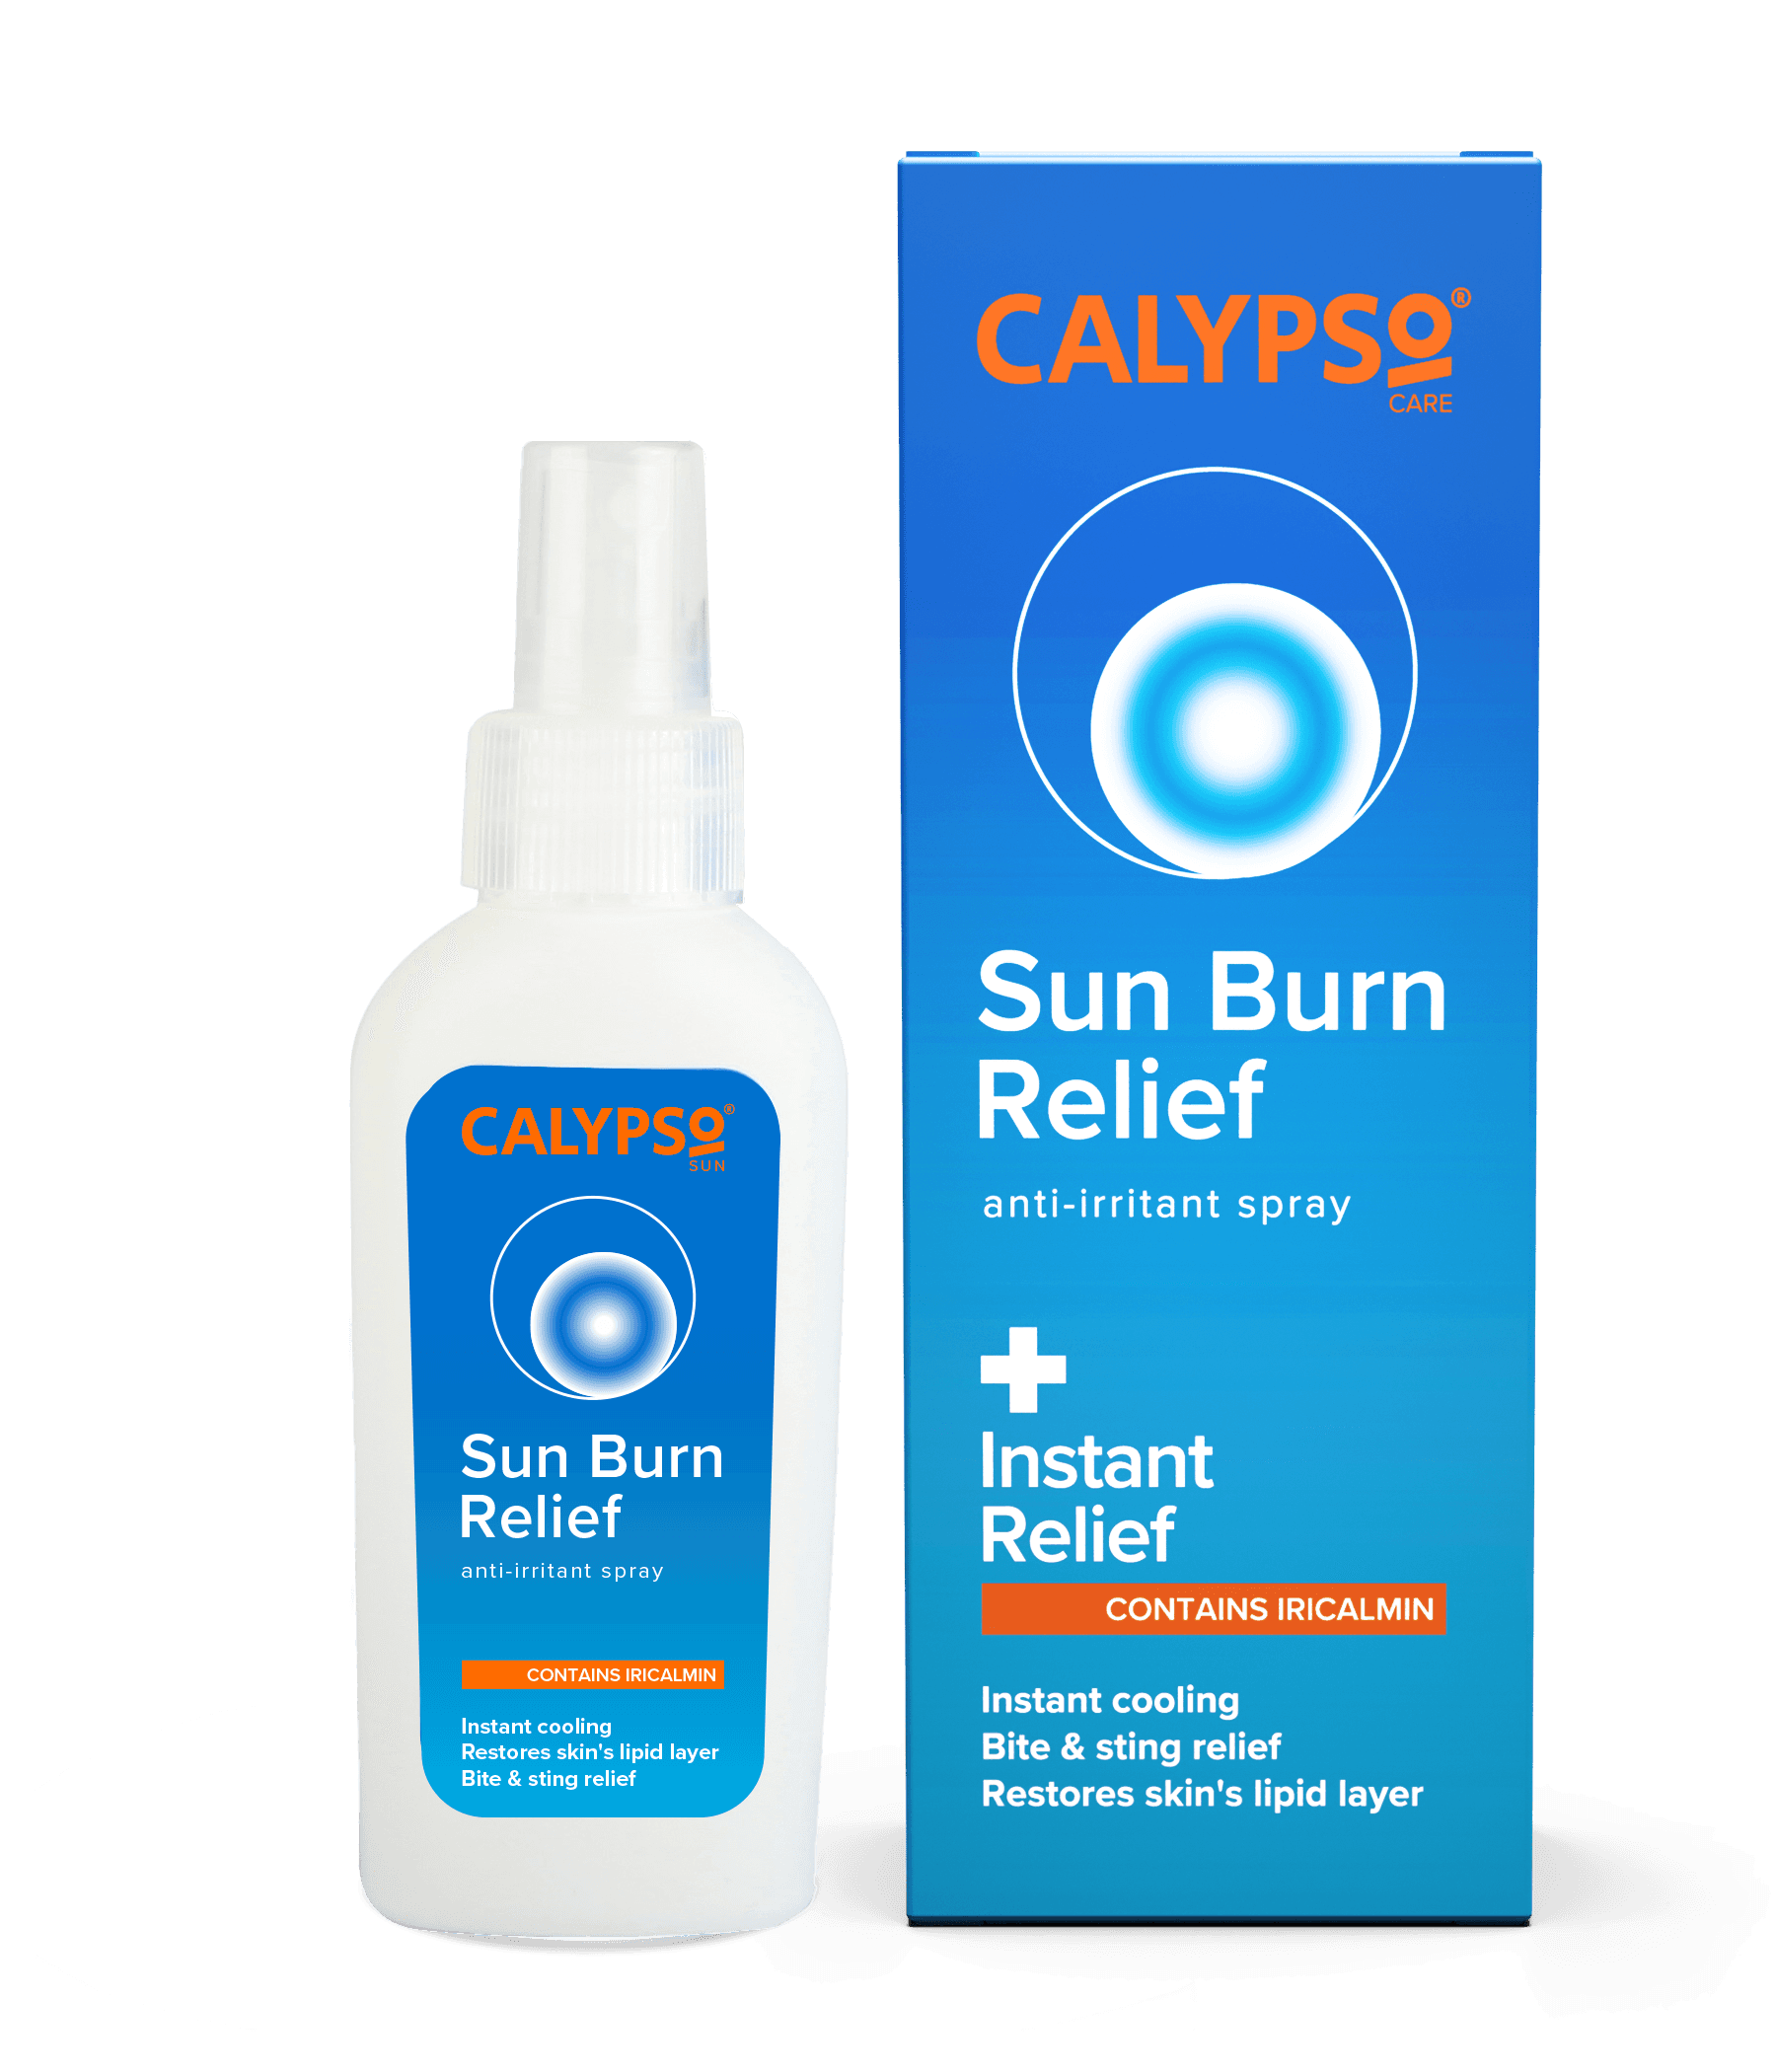 Calypso Sun Burn Relief spray and box